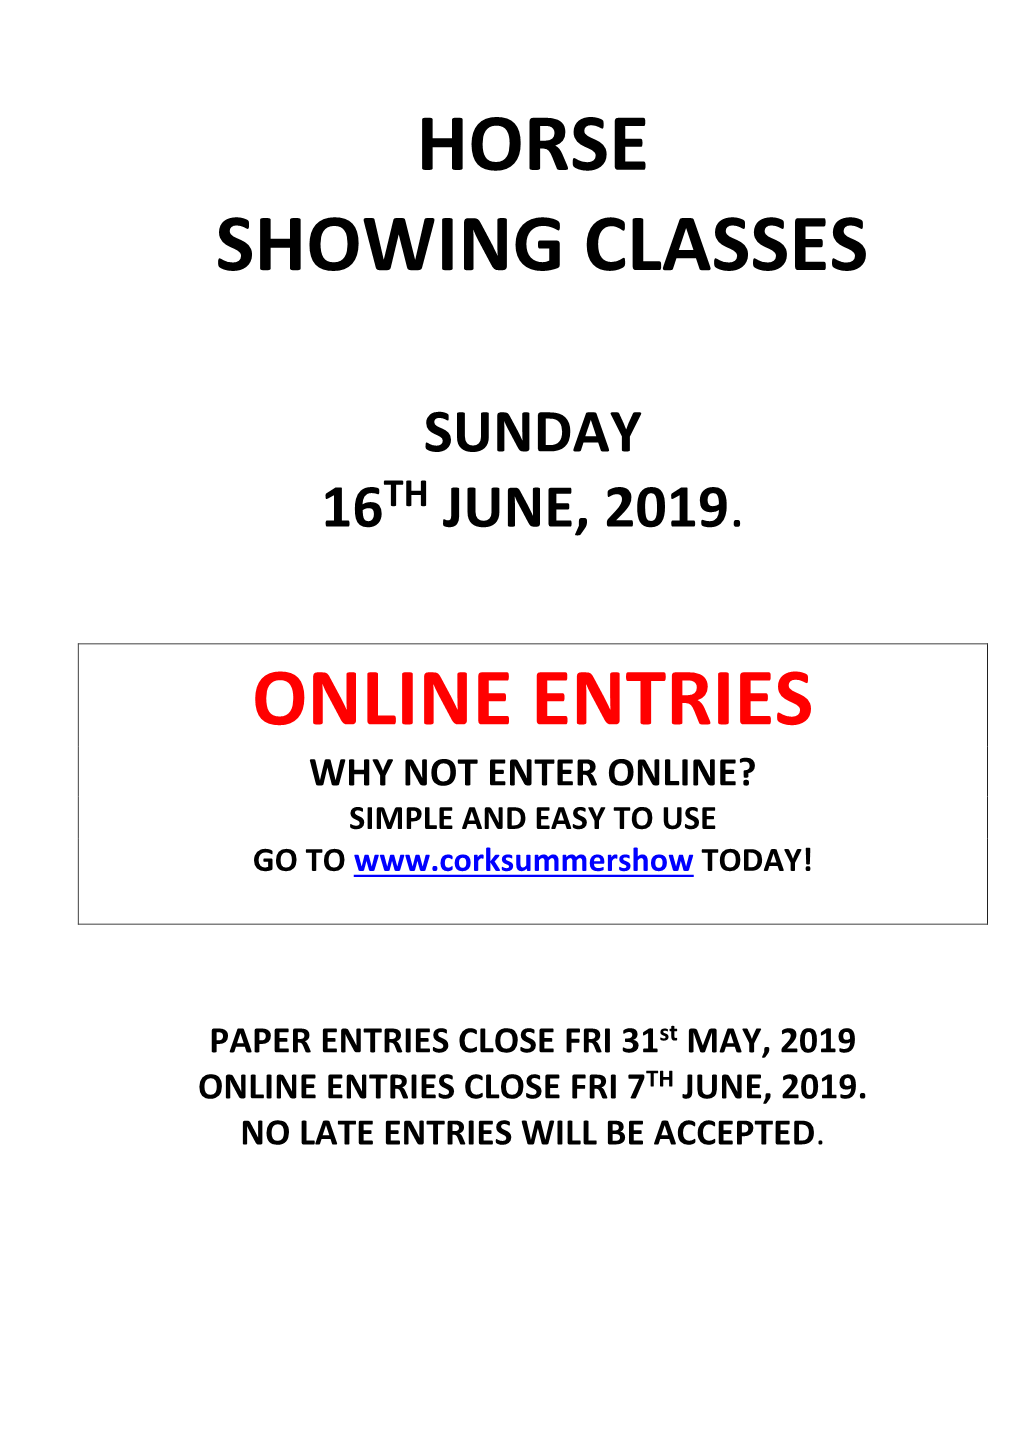 Horse Showing Classes Online Entries